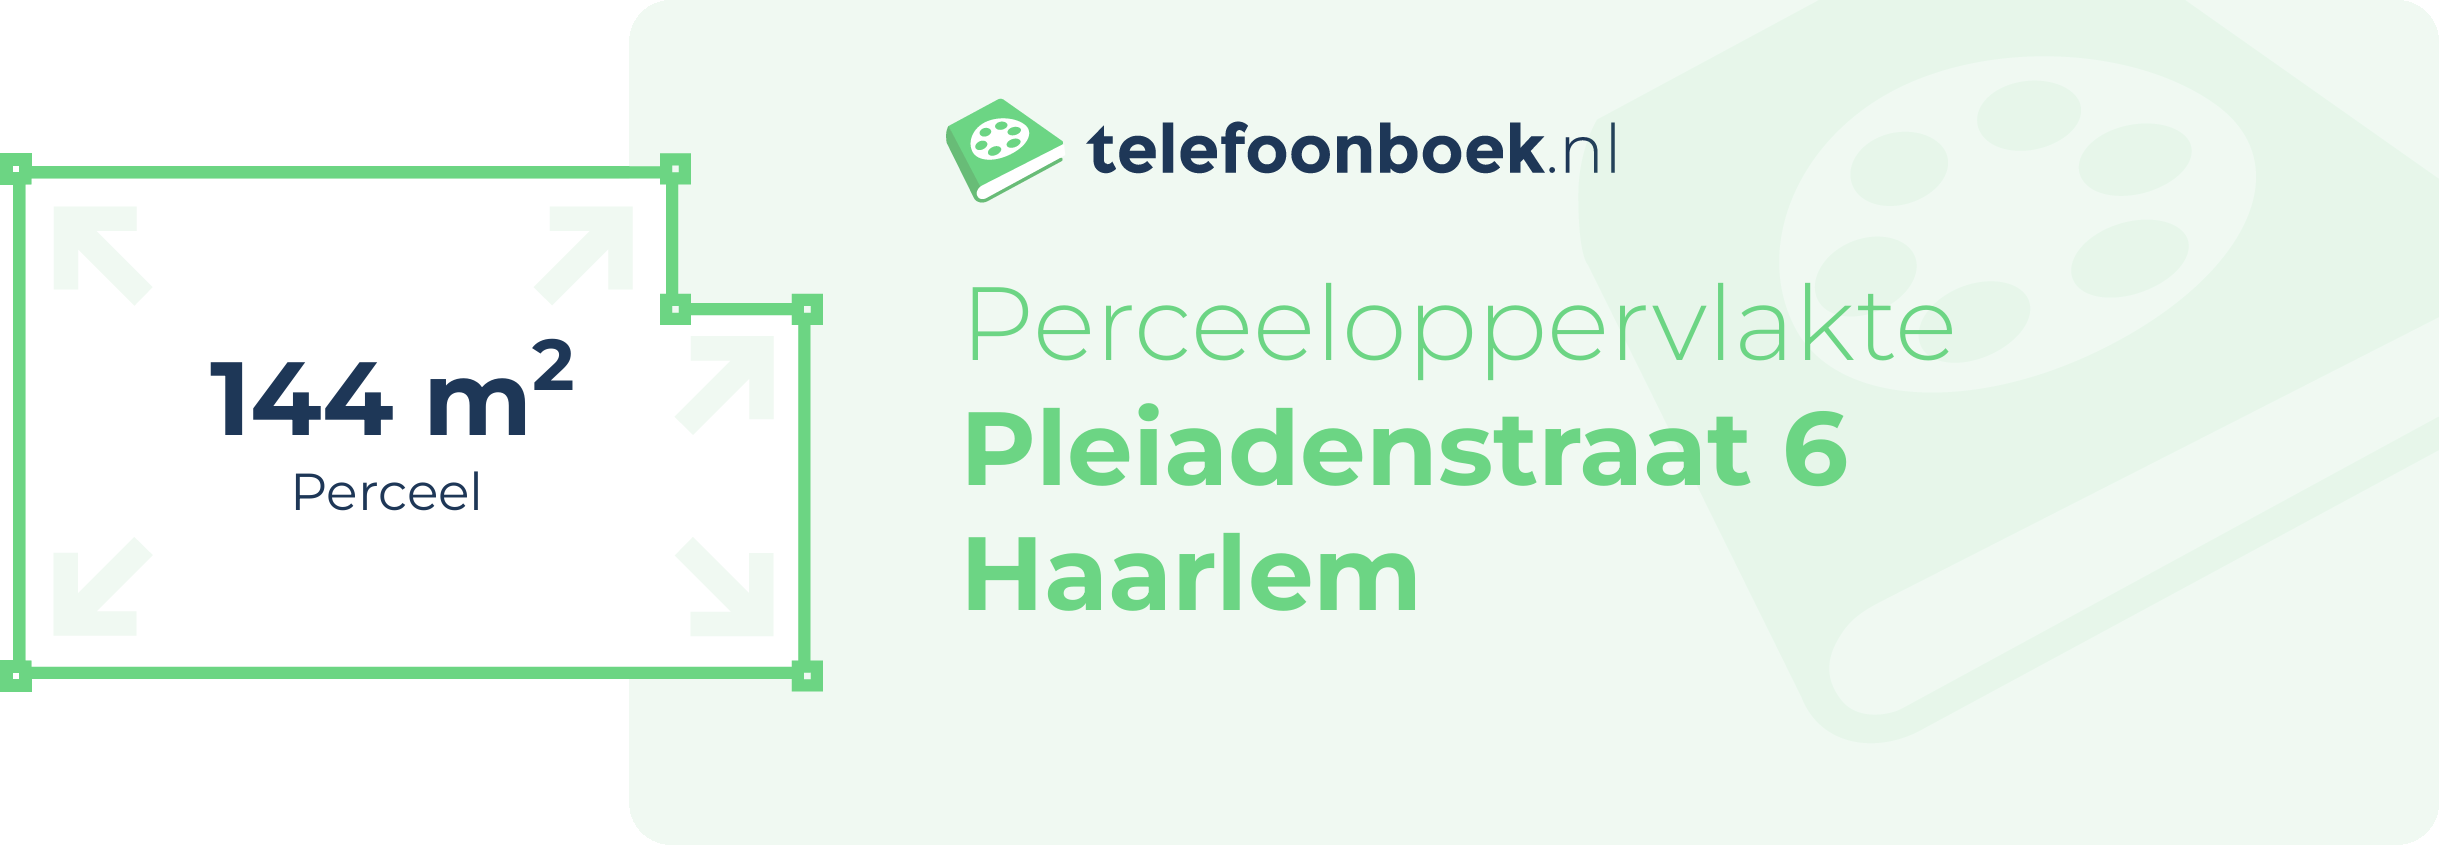 Perceeloppervlakte Pleiadenstraat 6 Haarlem